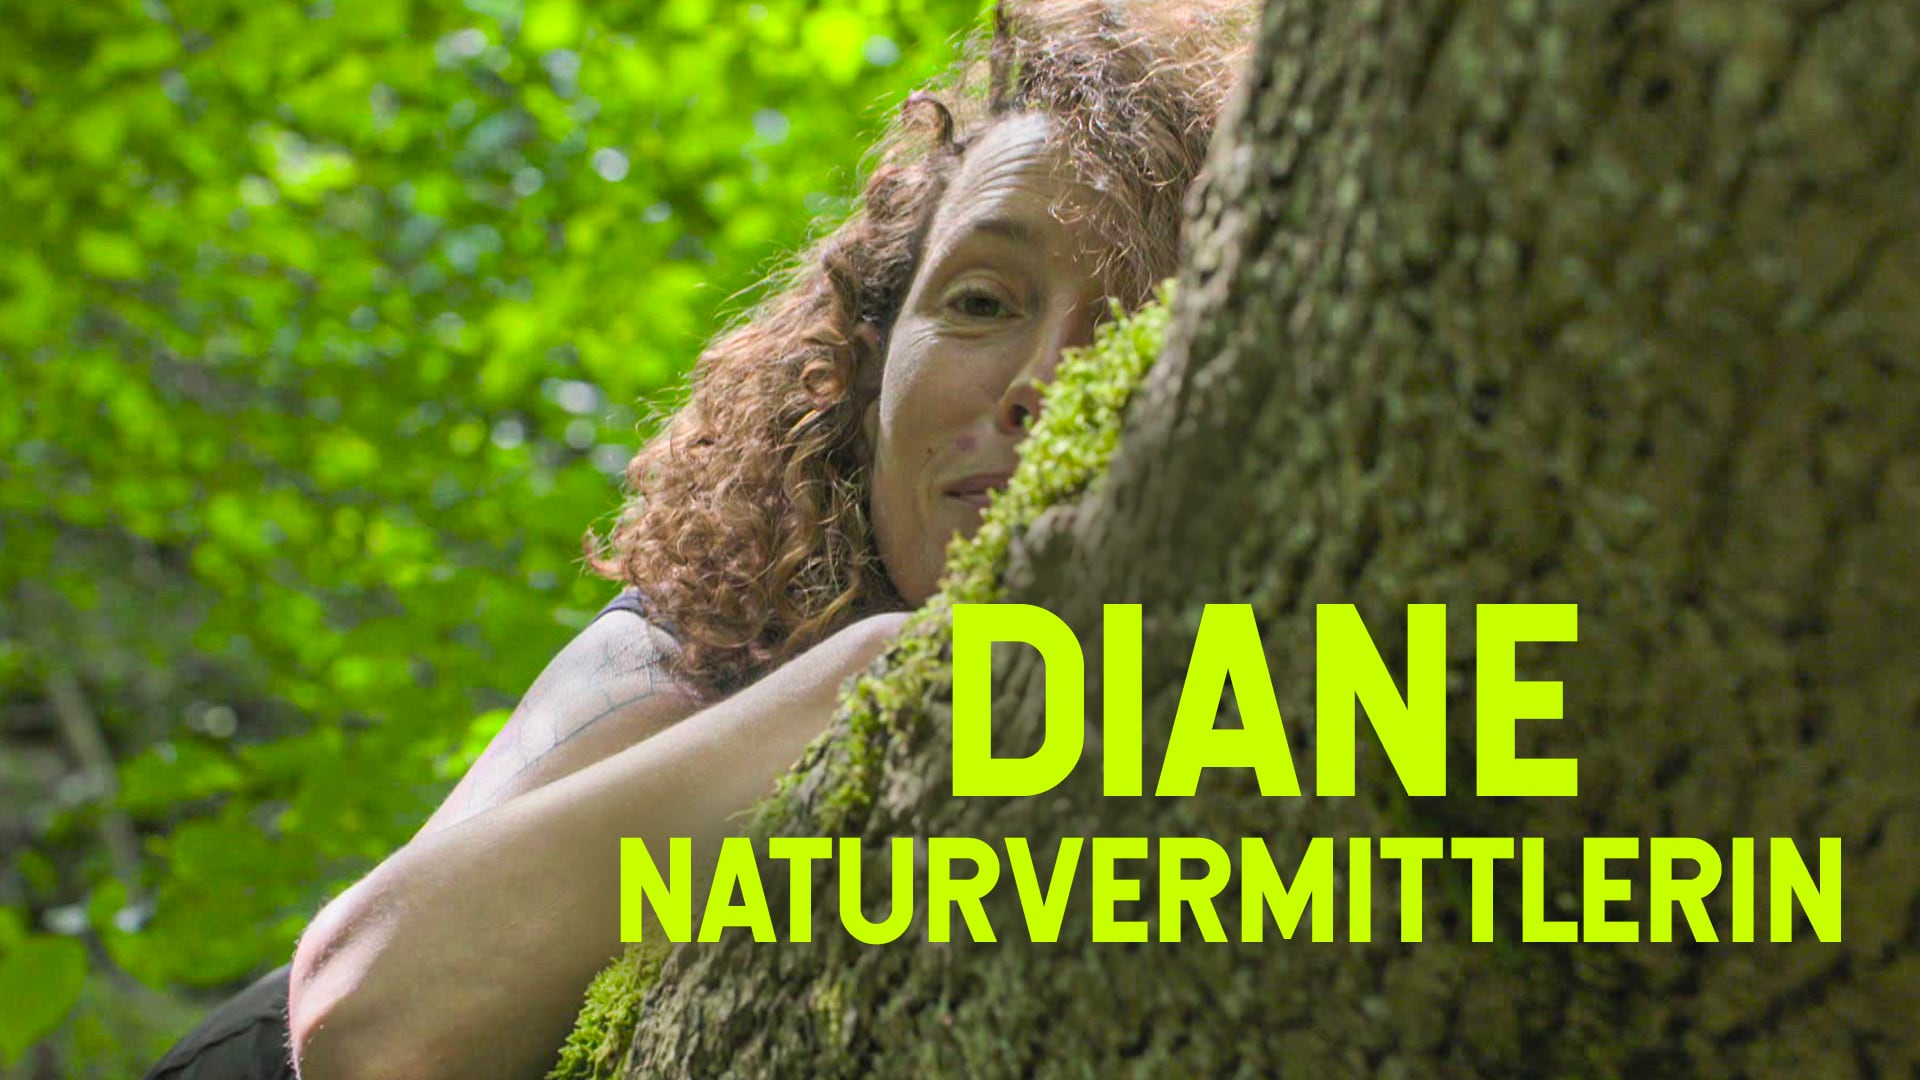 Diane, Naturvermittlerin